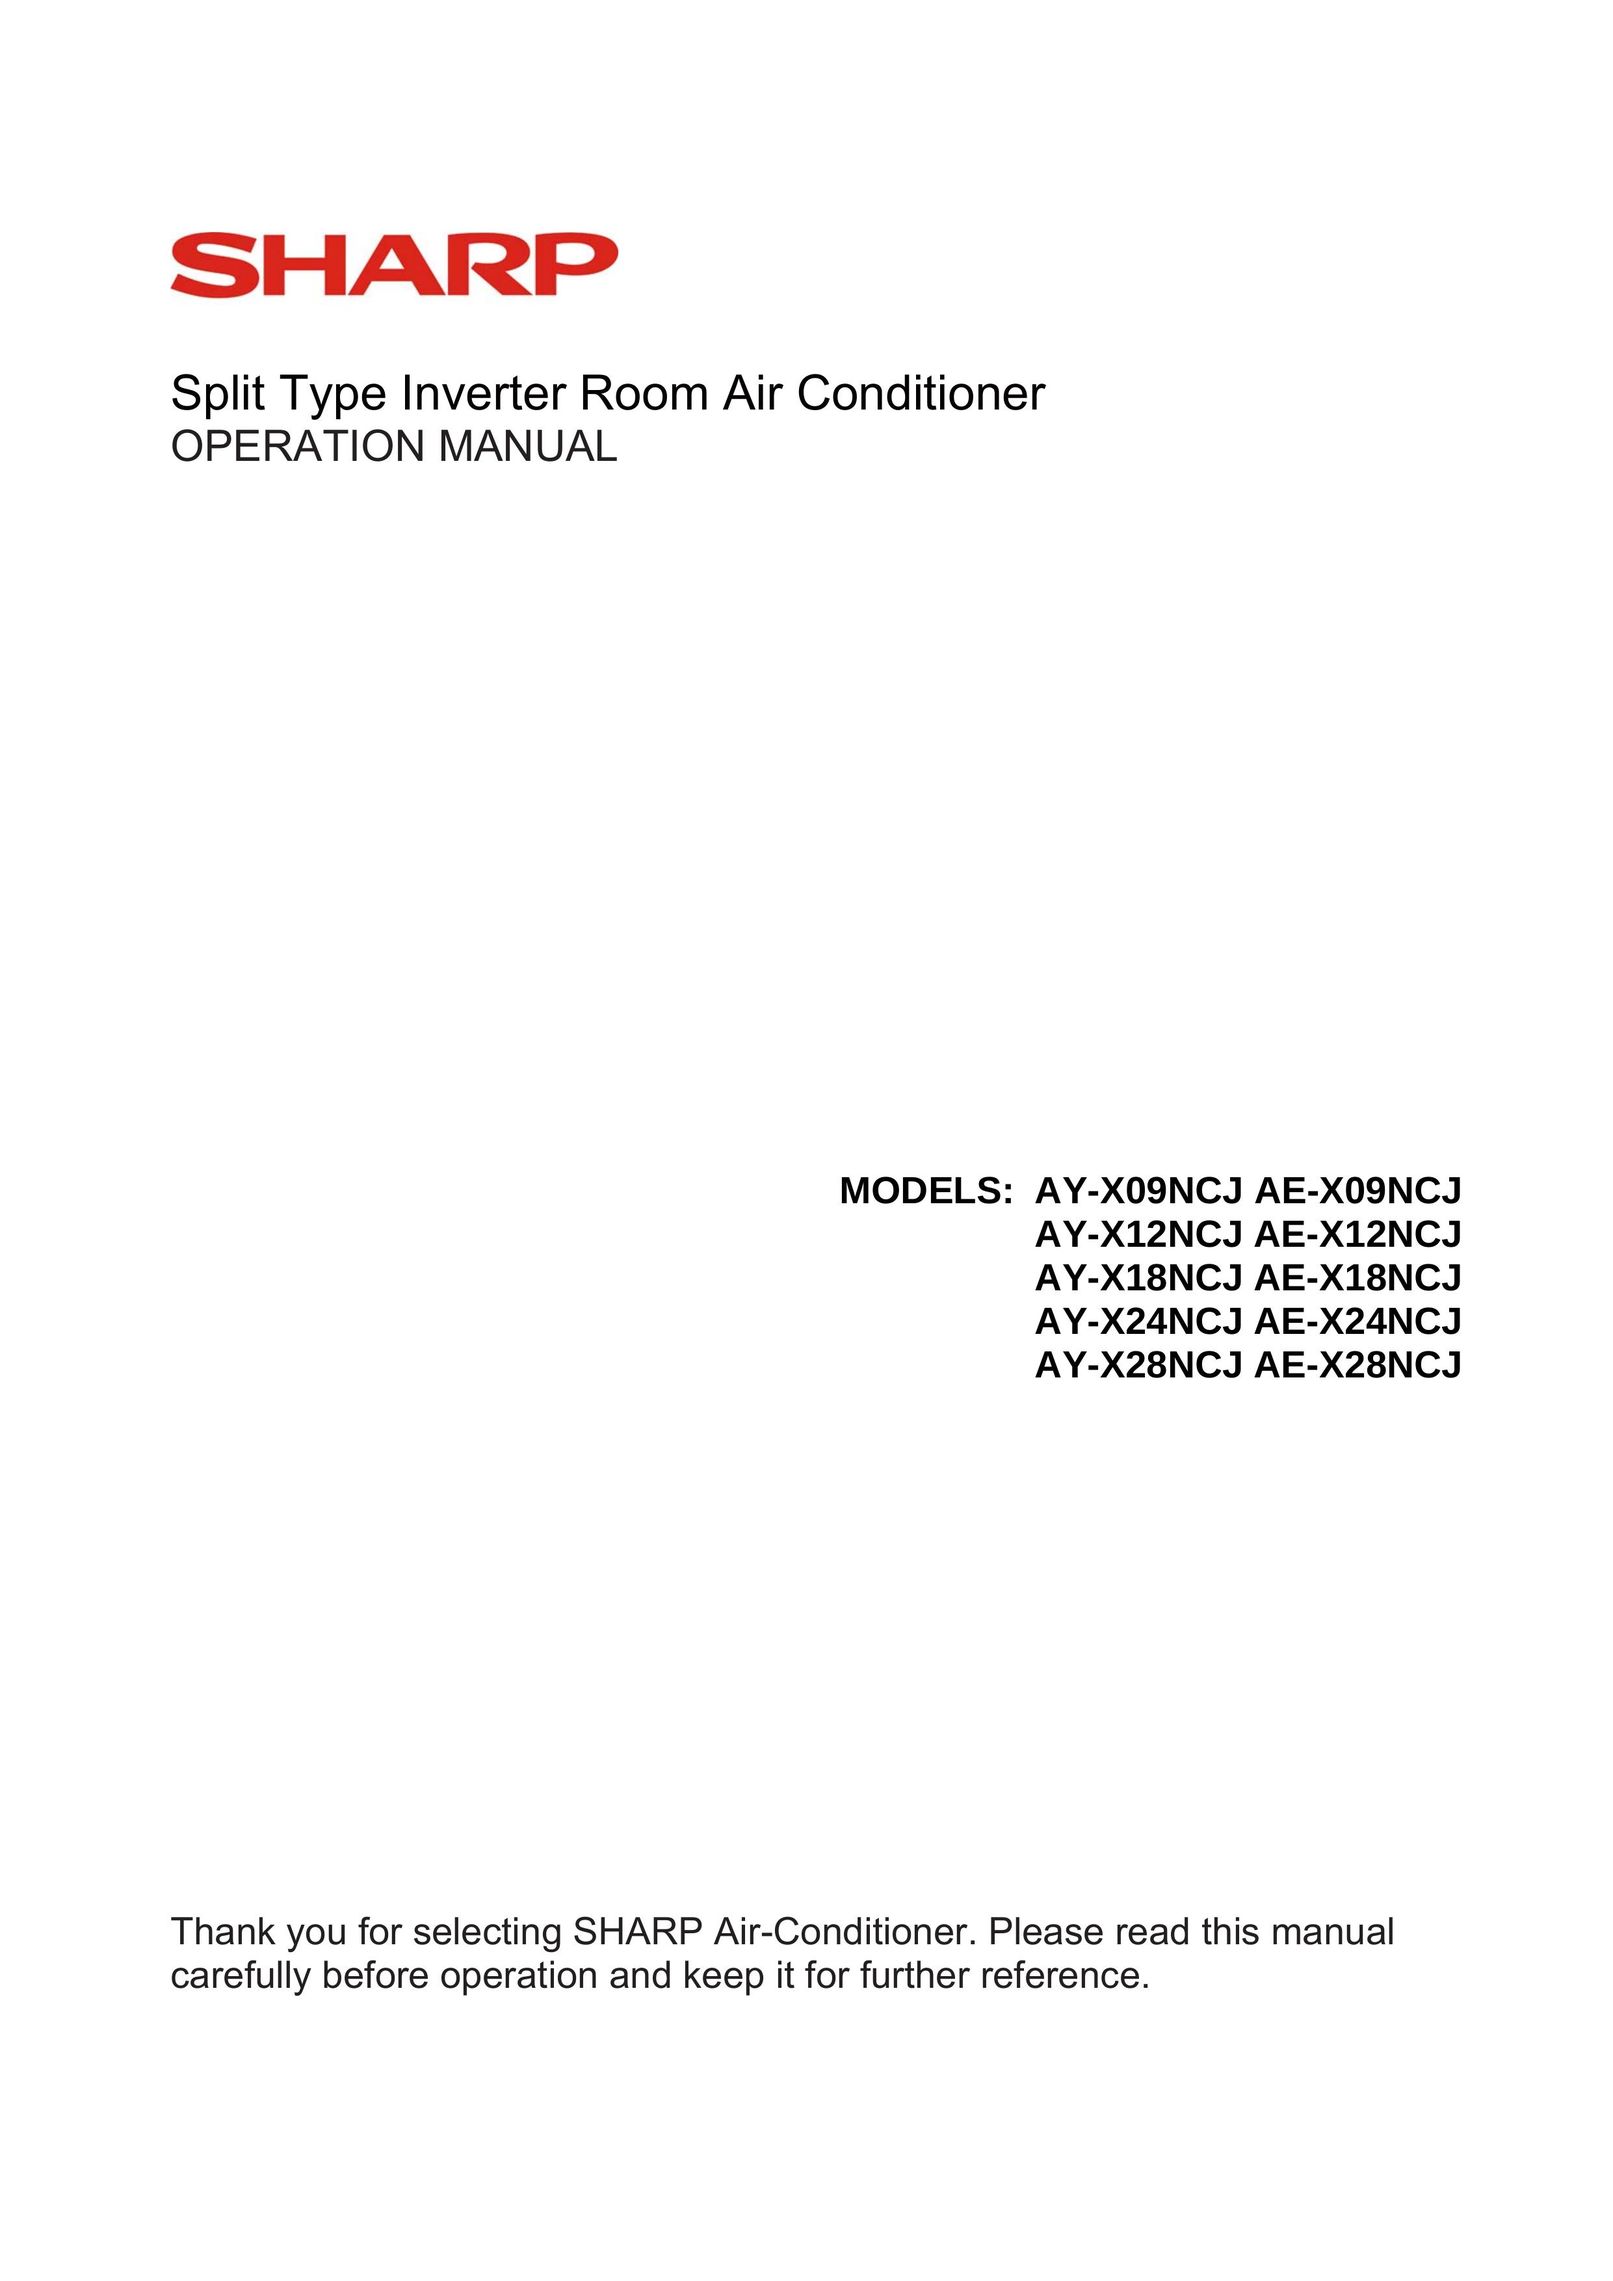 Sharp AE-X24NCJ Air Conditioner User Manual